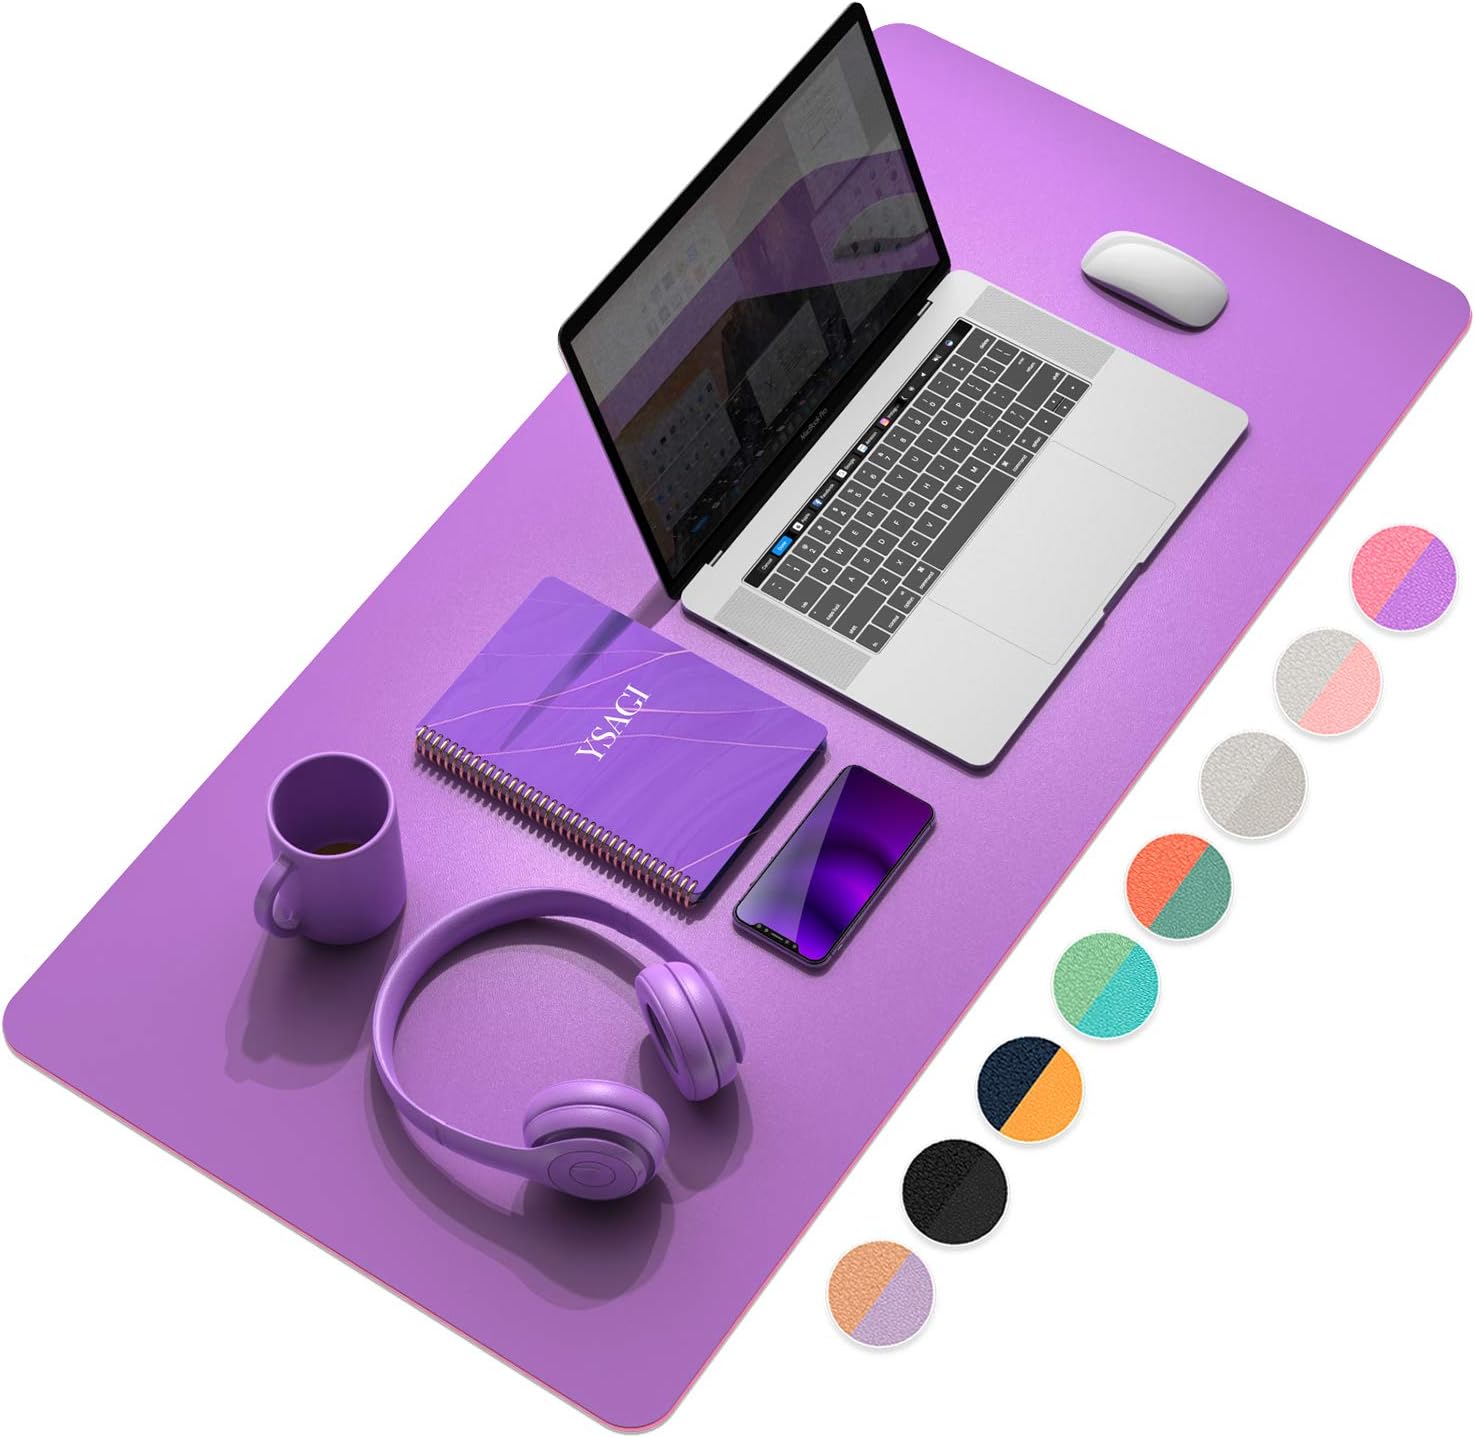 YSAGi Desk Mat, Desk Pad, 35.4" x 17" Laptop Desk Pad Protector, Large Leather Desk Blotter for Keyboard and Mouse, Dual-Sided Desk Writing Pad for Office(Aconite Violet Eosine Pink)